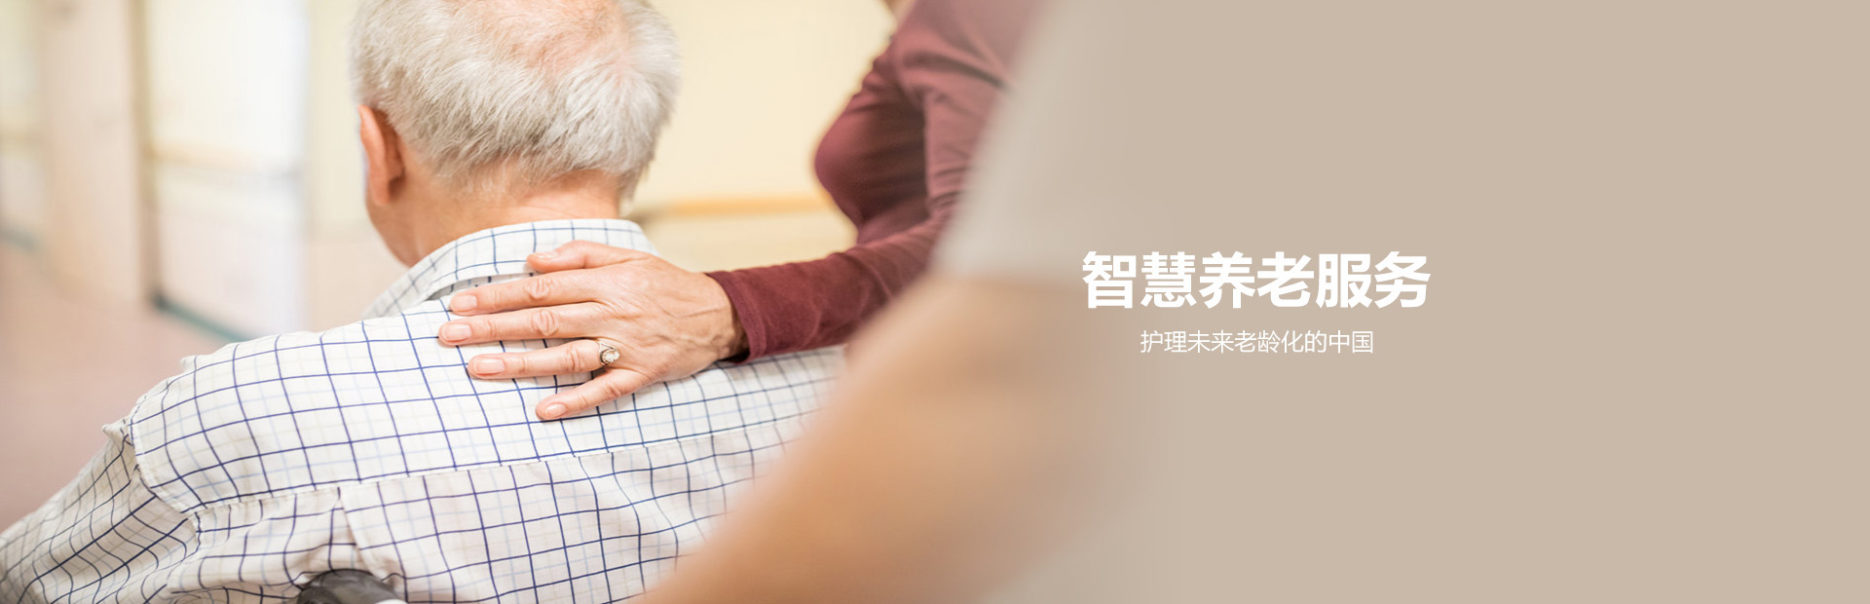 China's elderly population. Credit: Zhongkuanghuaxin